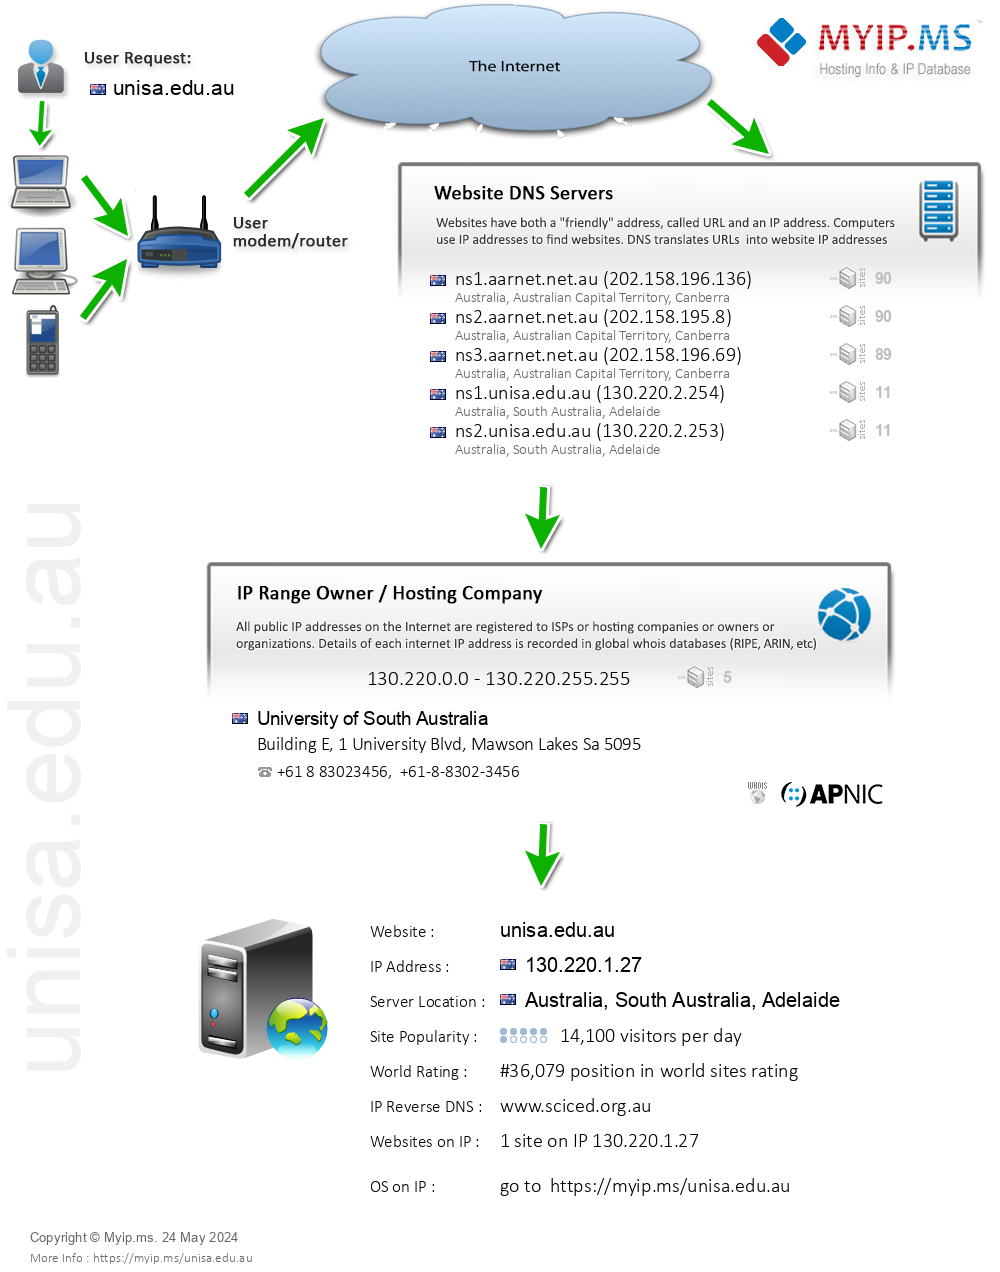 Unisa.edu.au - Website Hosting Visual IP Diagram